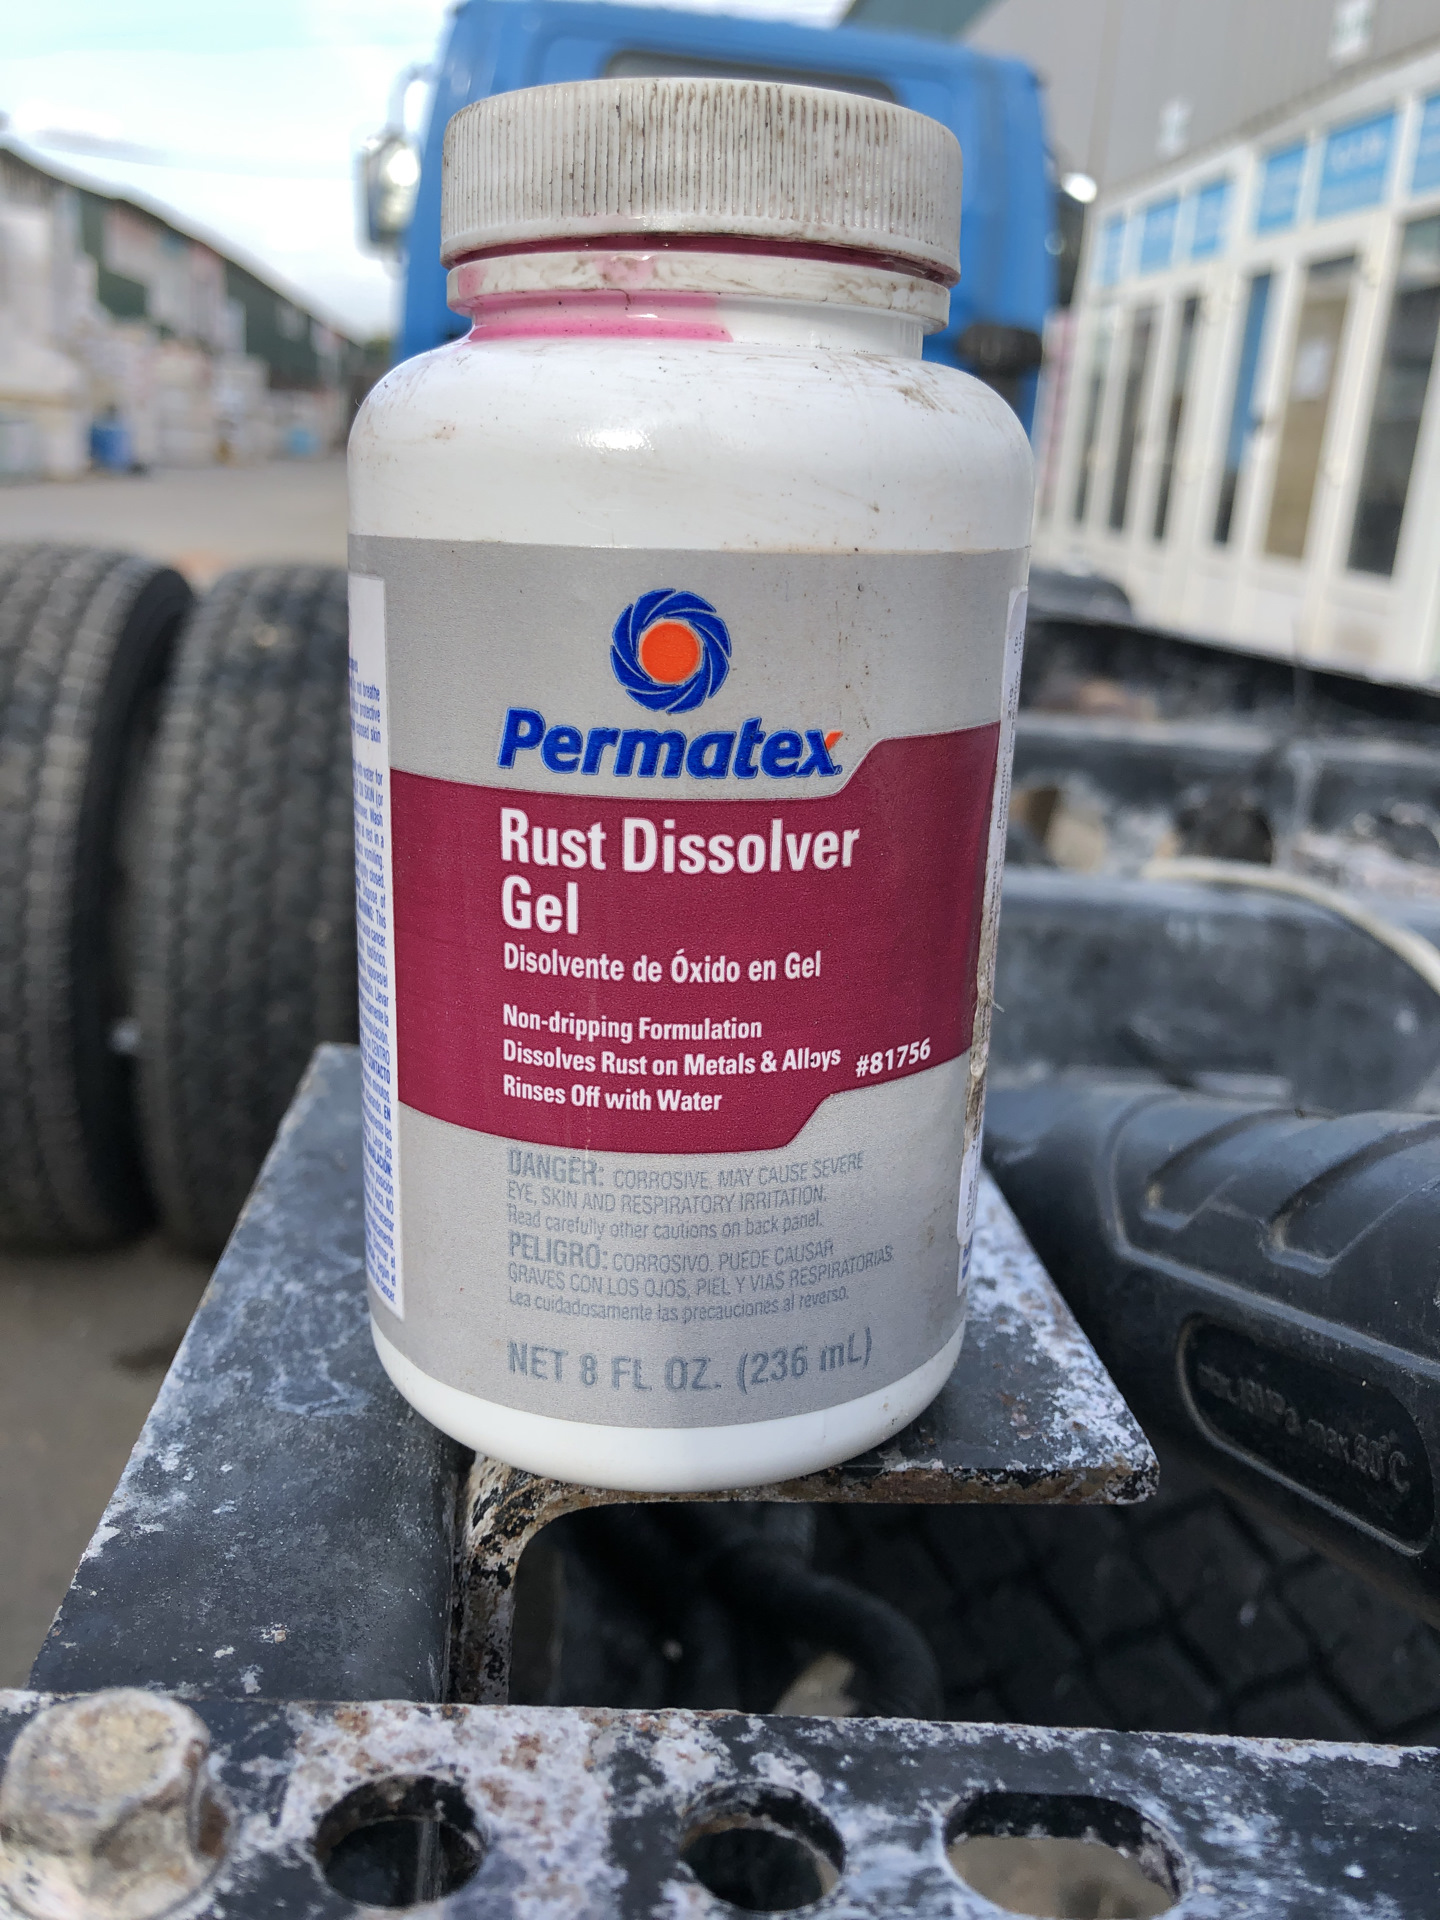 Permatex rust treatment аэрозоль фото 57